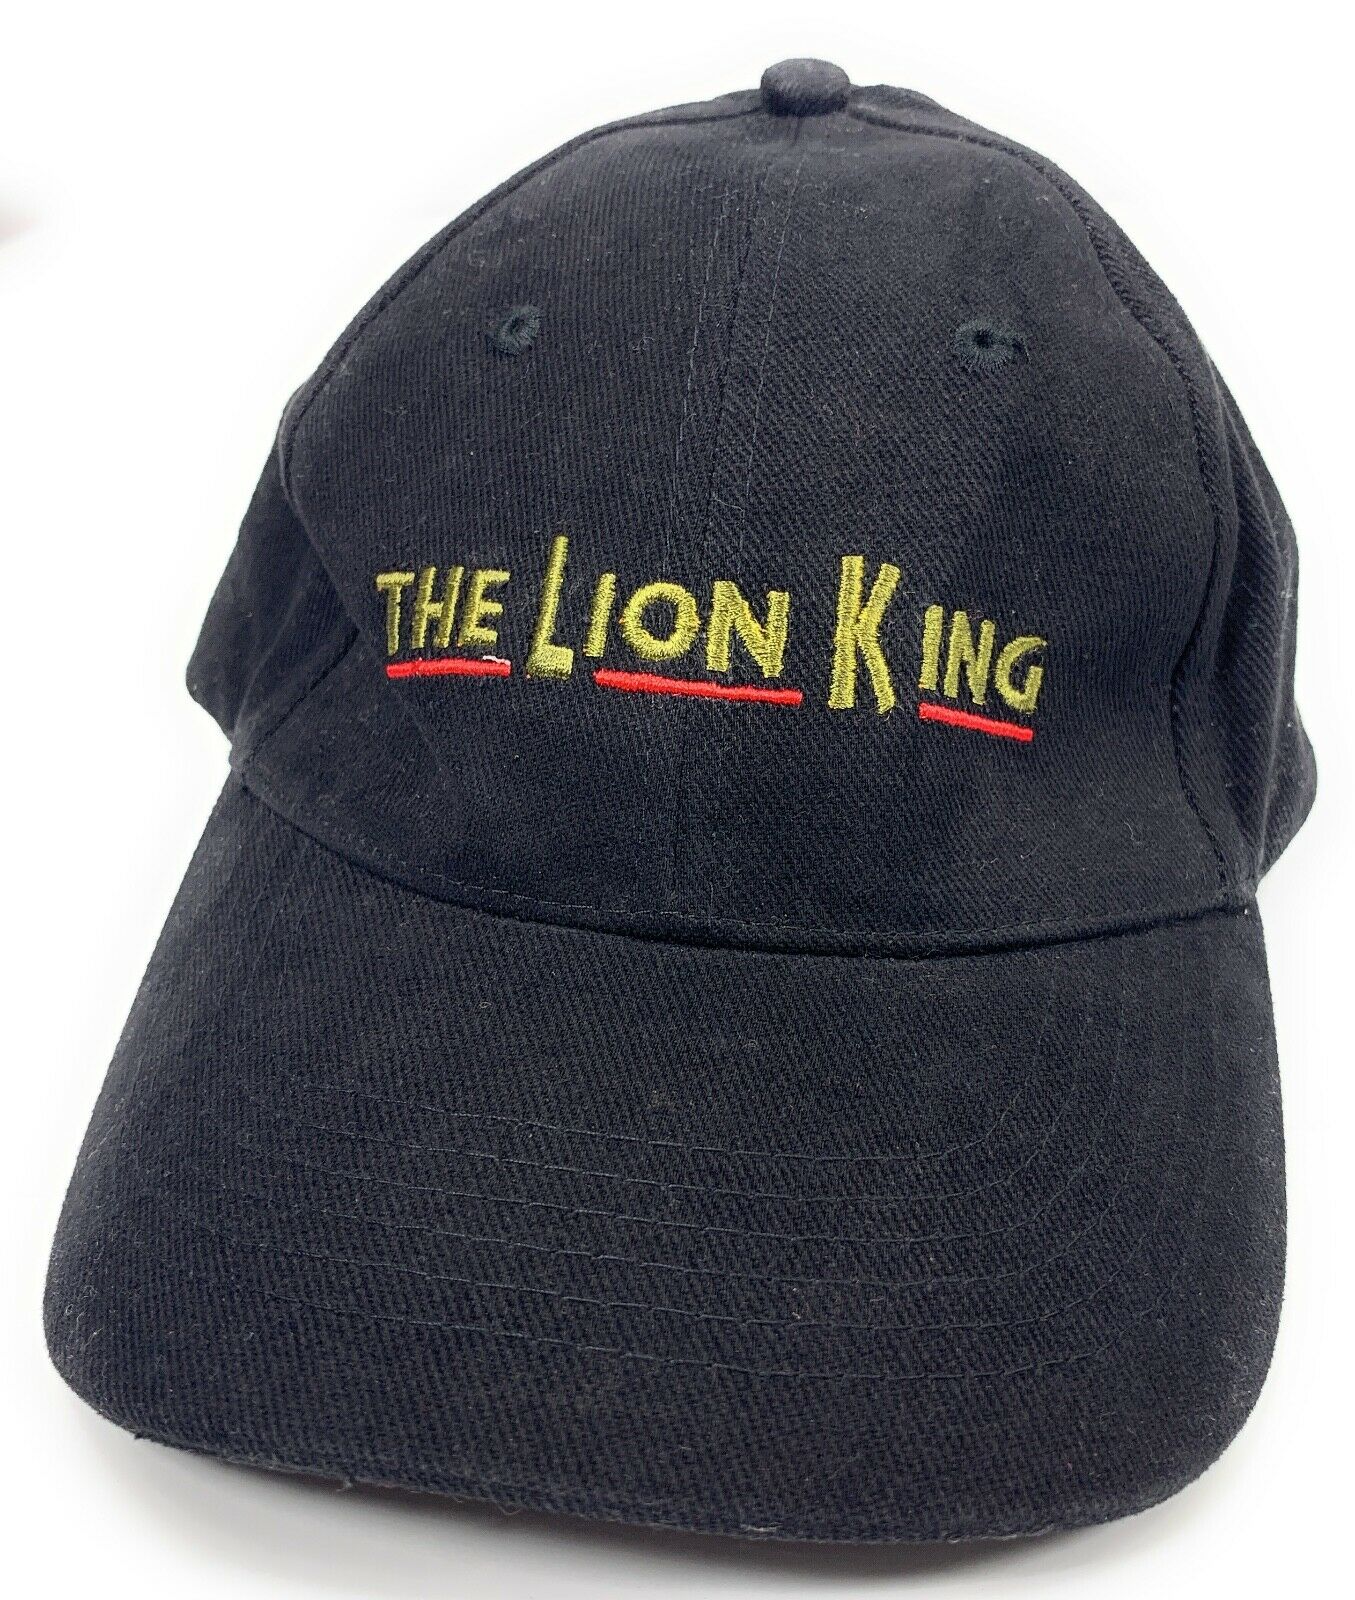 Disney The Lion King Broadway Musical Vip Strapback Cap Hat Adjustable Black